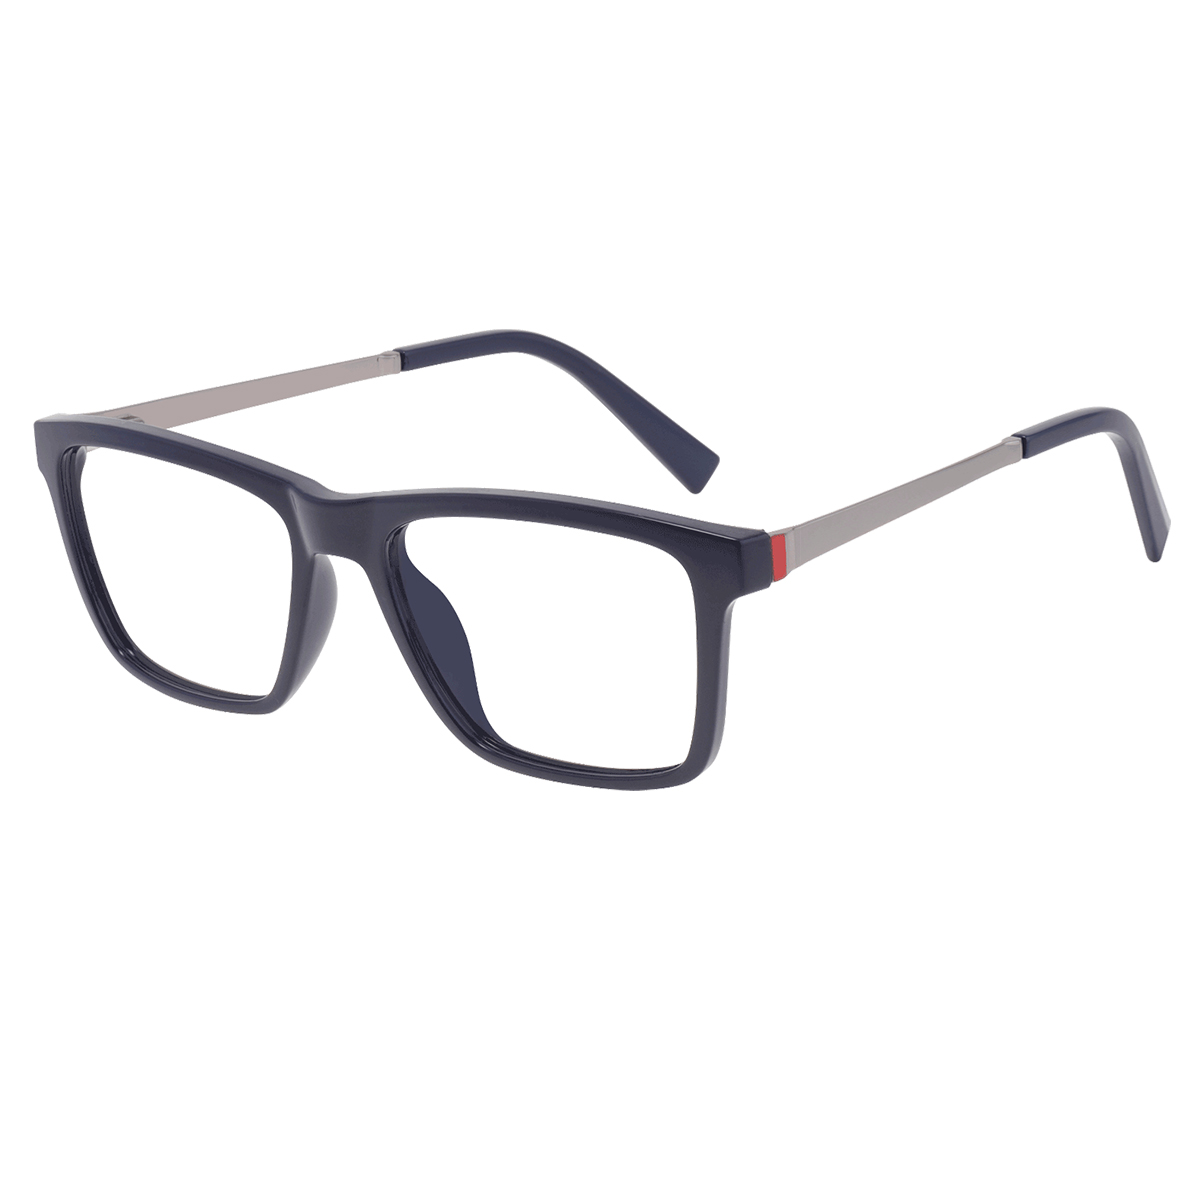 Aether - Square Blue Reading Glasses for Men